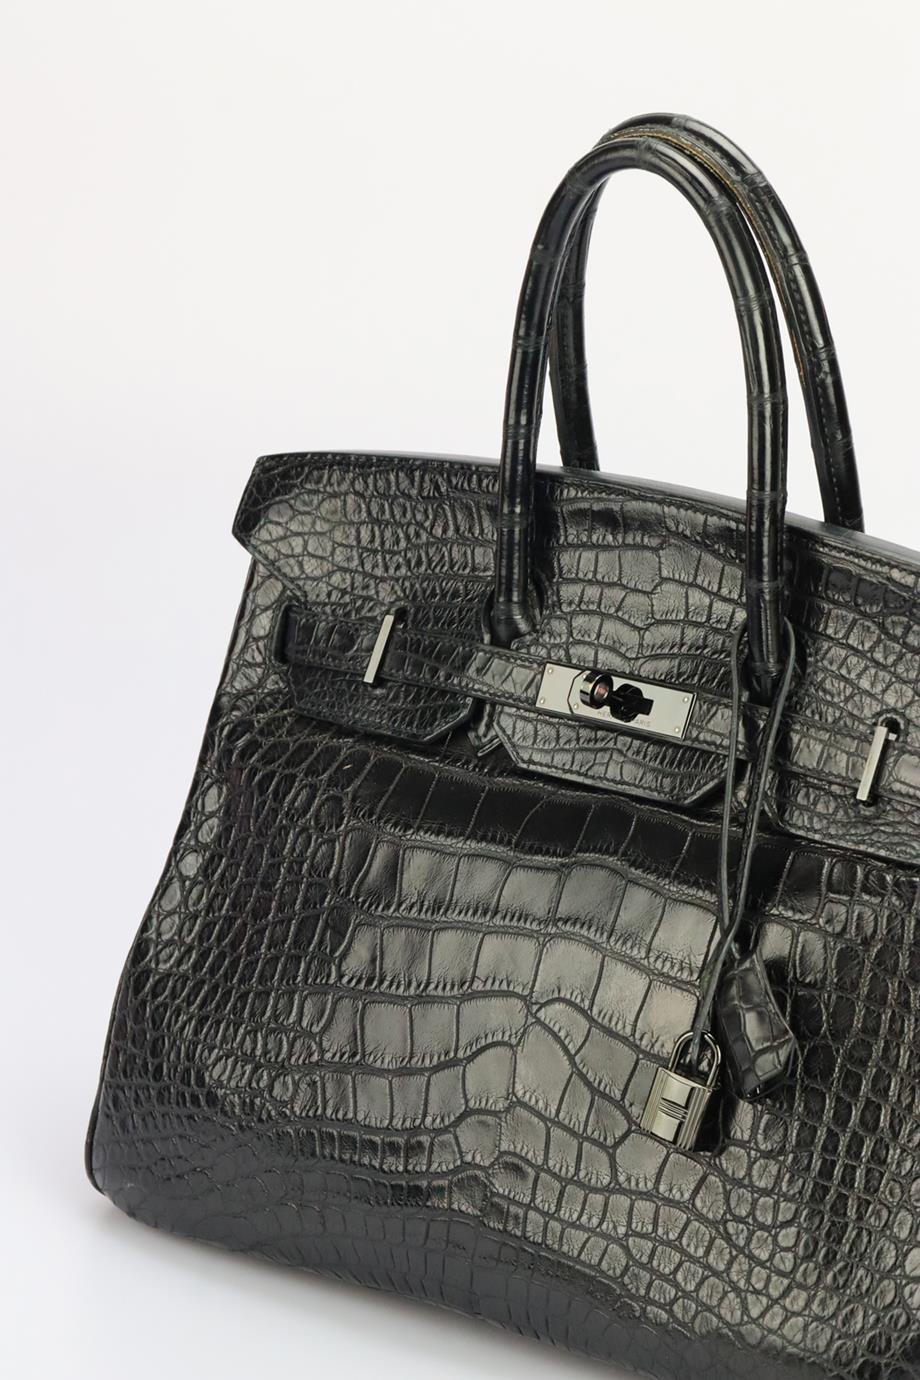 Hermès 2010 Birkin 35cm So Black Matte Alligator Bag In Good Condition For Sale In London, GB